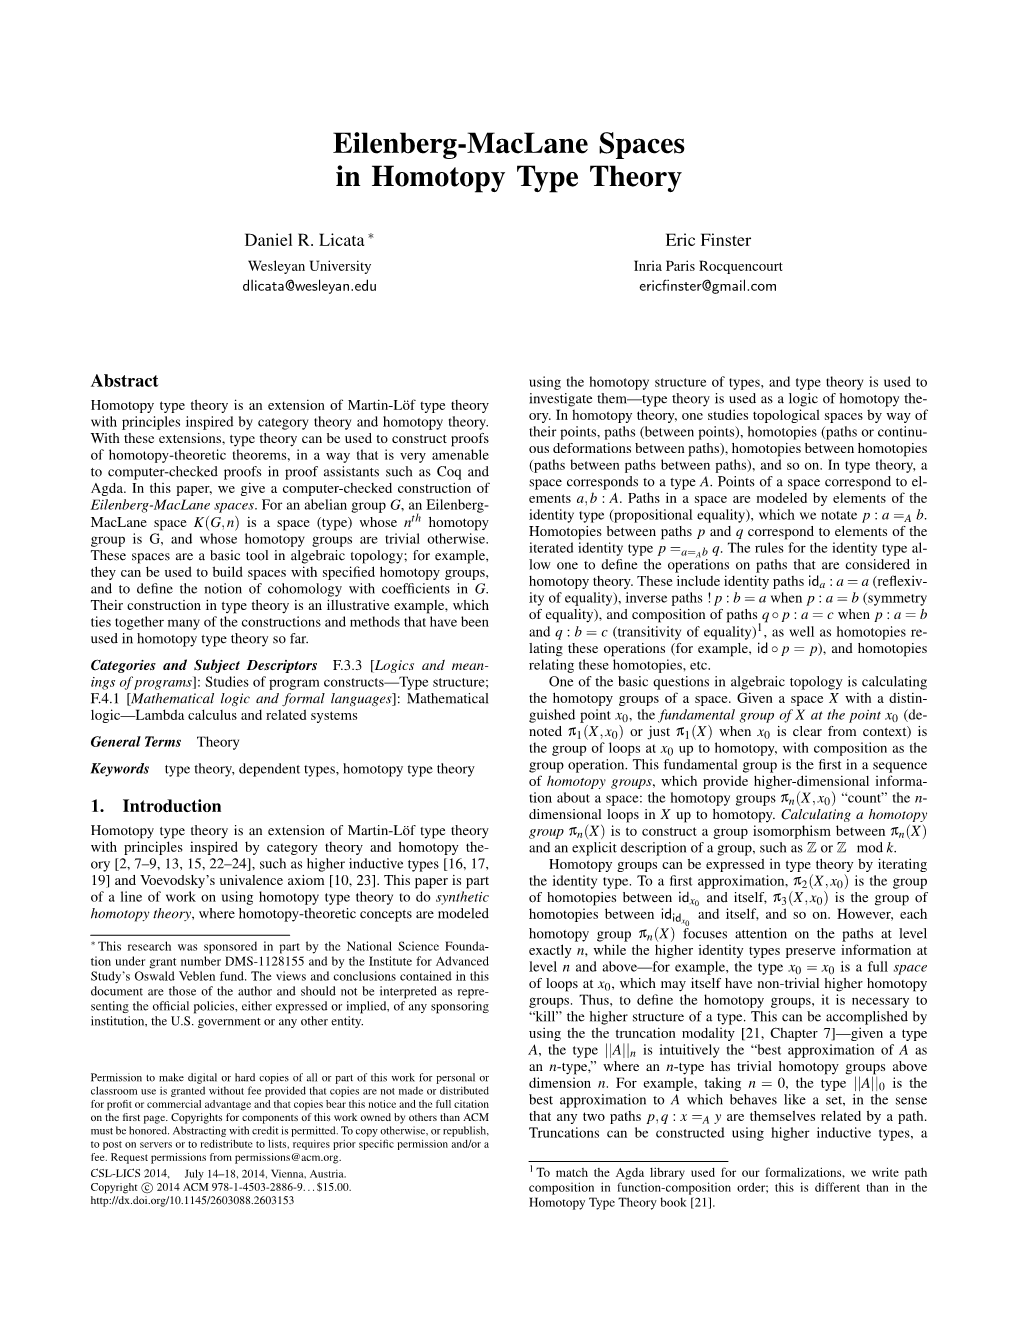 Eilenberg-Maclane Spaces in Homotopy Type Theory